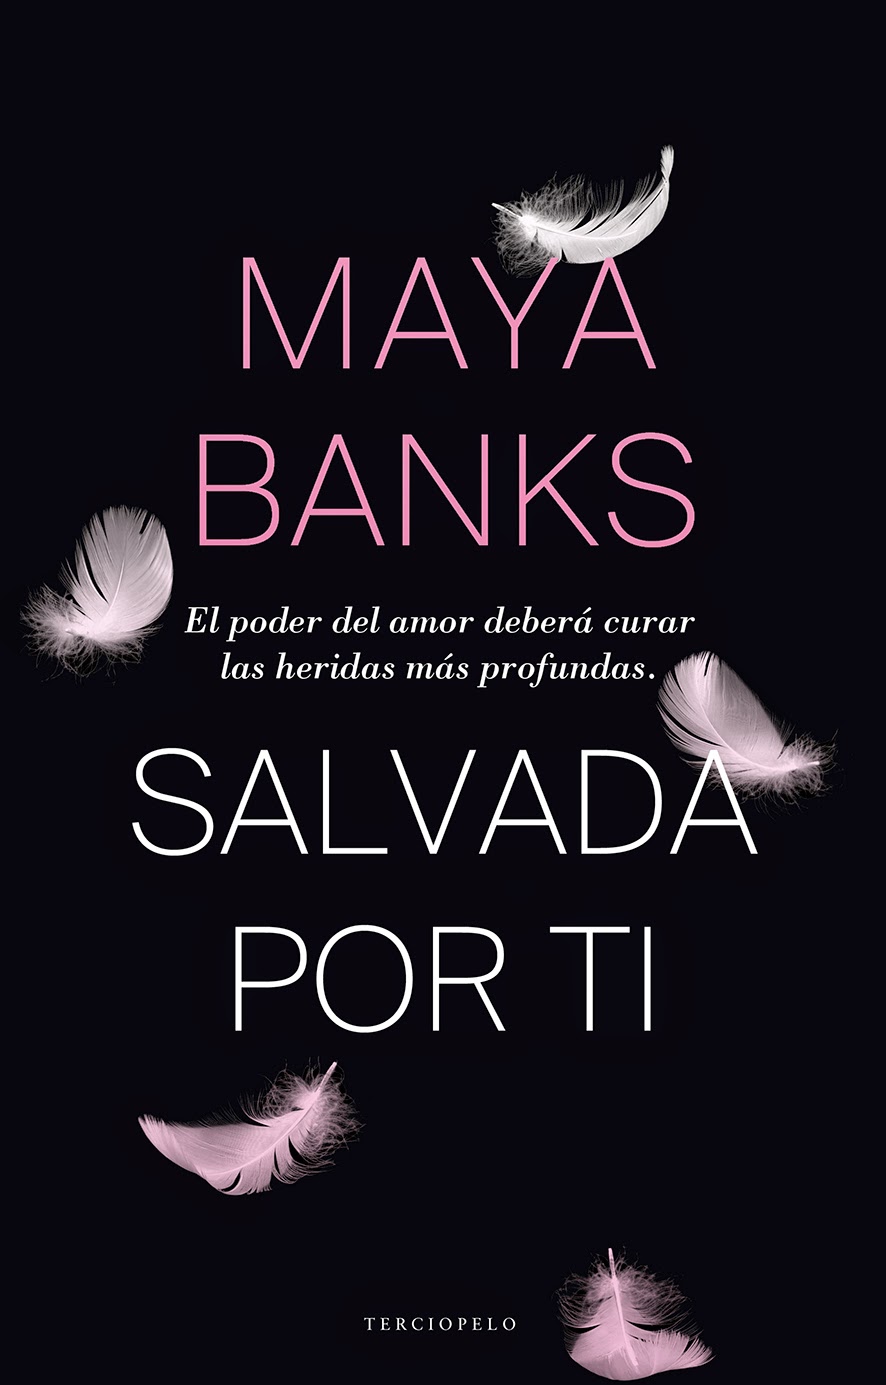 Libro de audio Salvada por ti – Maya Banks